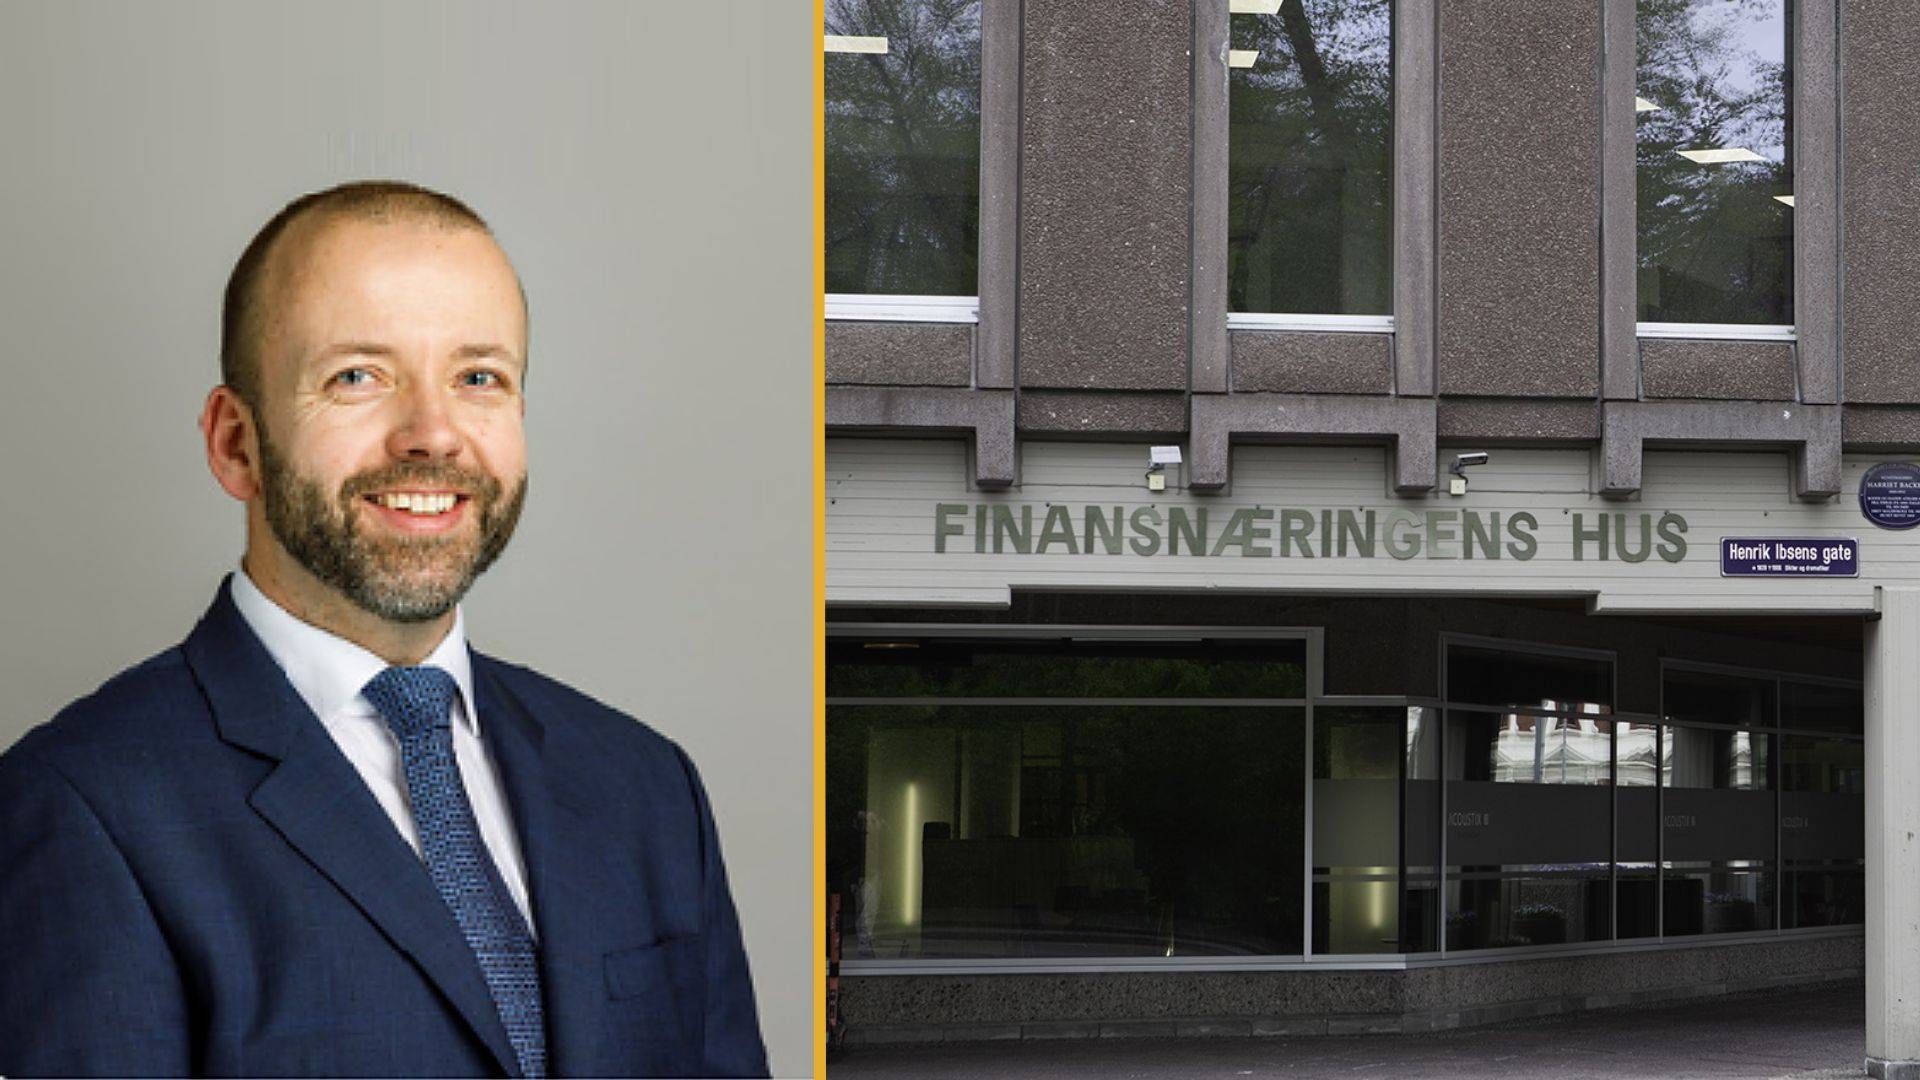 Fagdirektør for livsforsikring og pensjon i Finans Norge, Martin Carlén. | Foto: Finans Norge